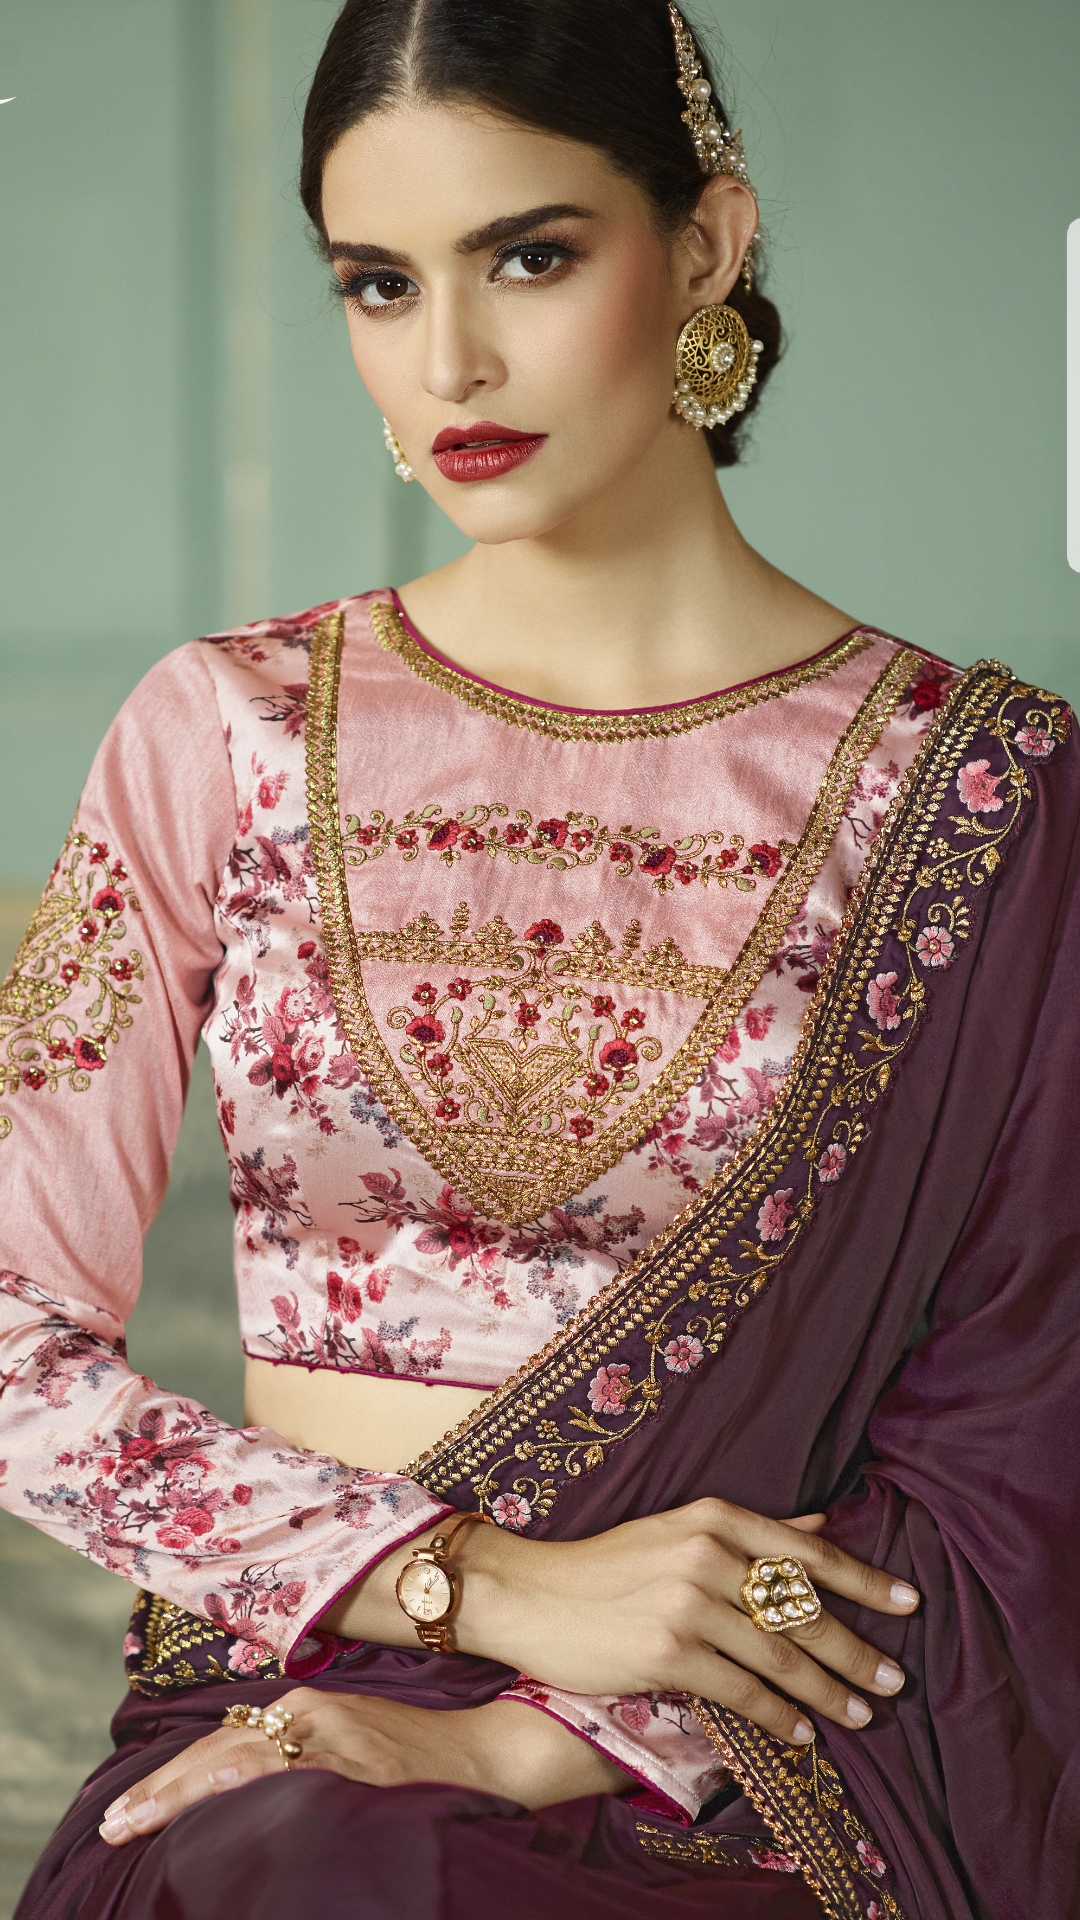 Women's Clothing - Buy Indian Ethnic Dress for Women Online |Siya Fashion